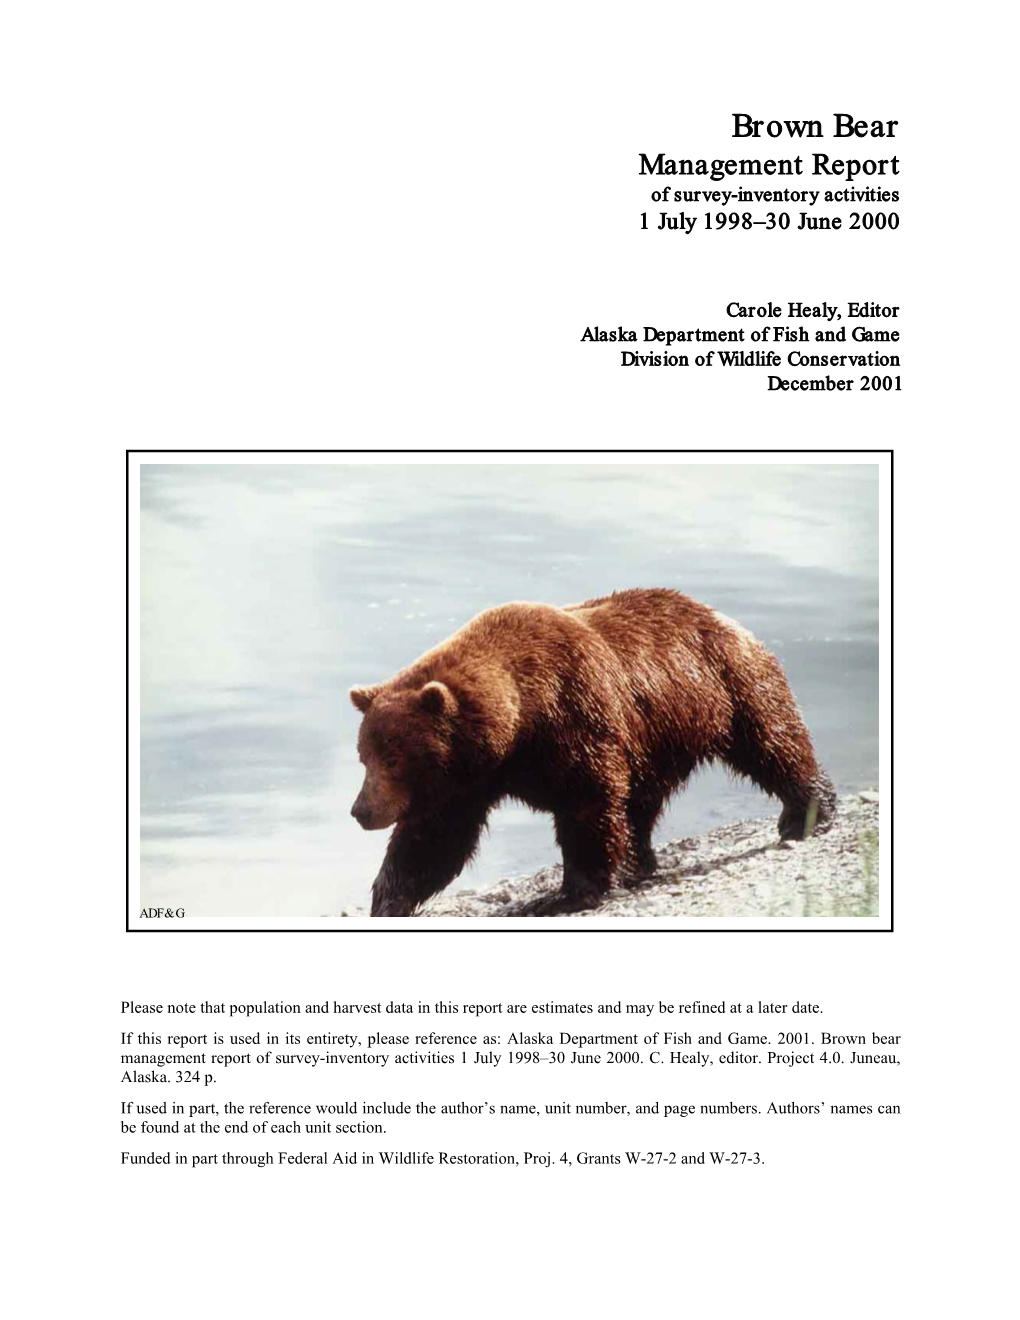 Brown Bear Management Rpt Alaska Dept Fish and Game Wildlife